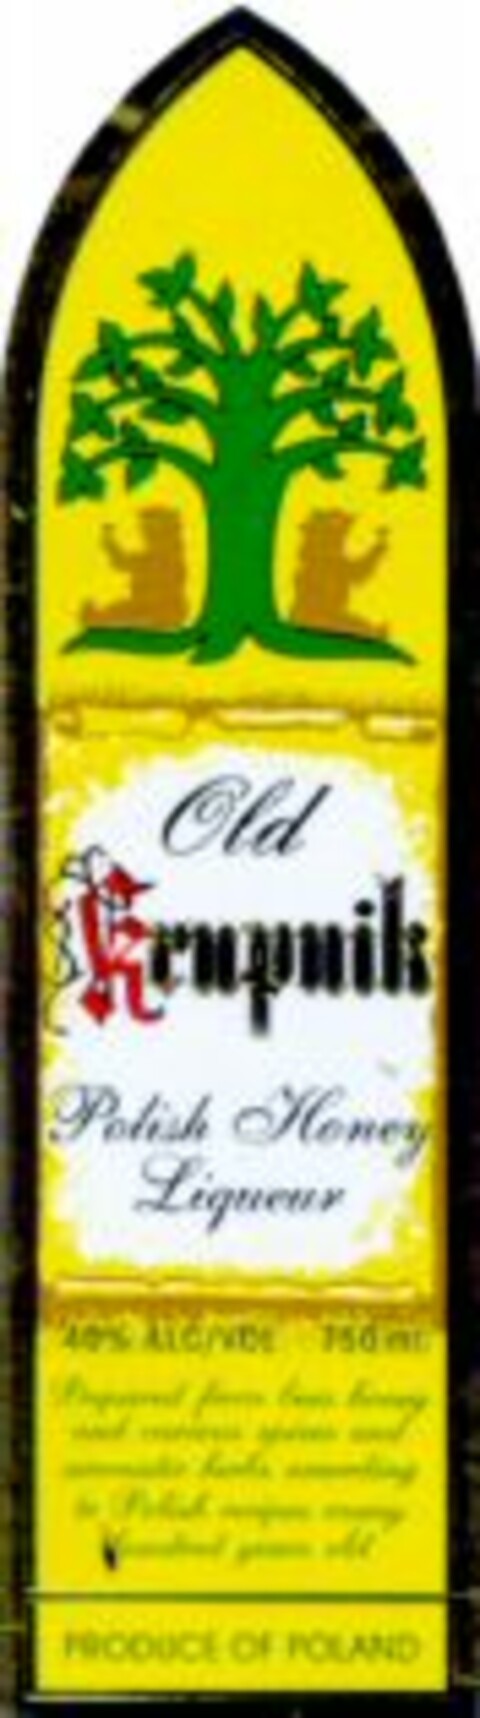 Old Krupnik Polish Honey Liqueur Logo (WIPO, 05.11.2002)